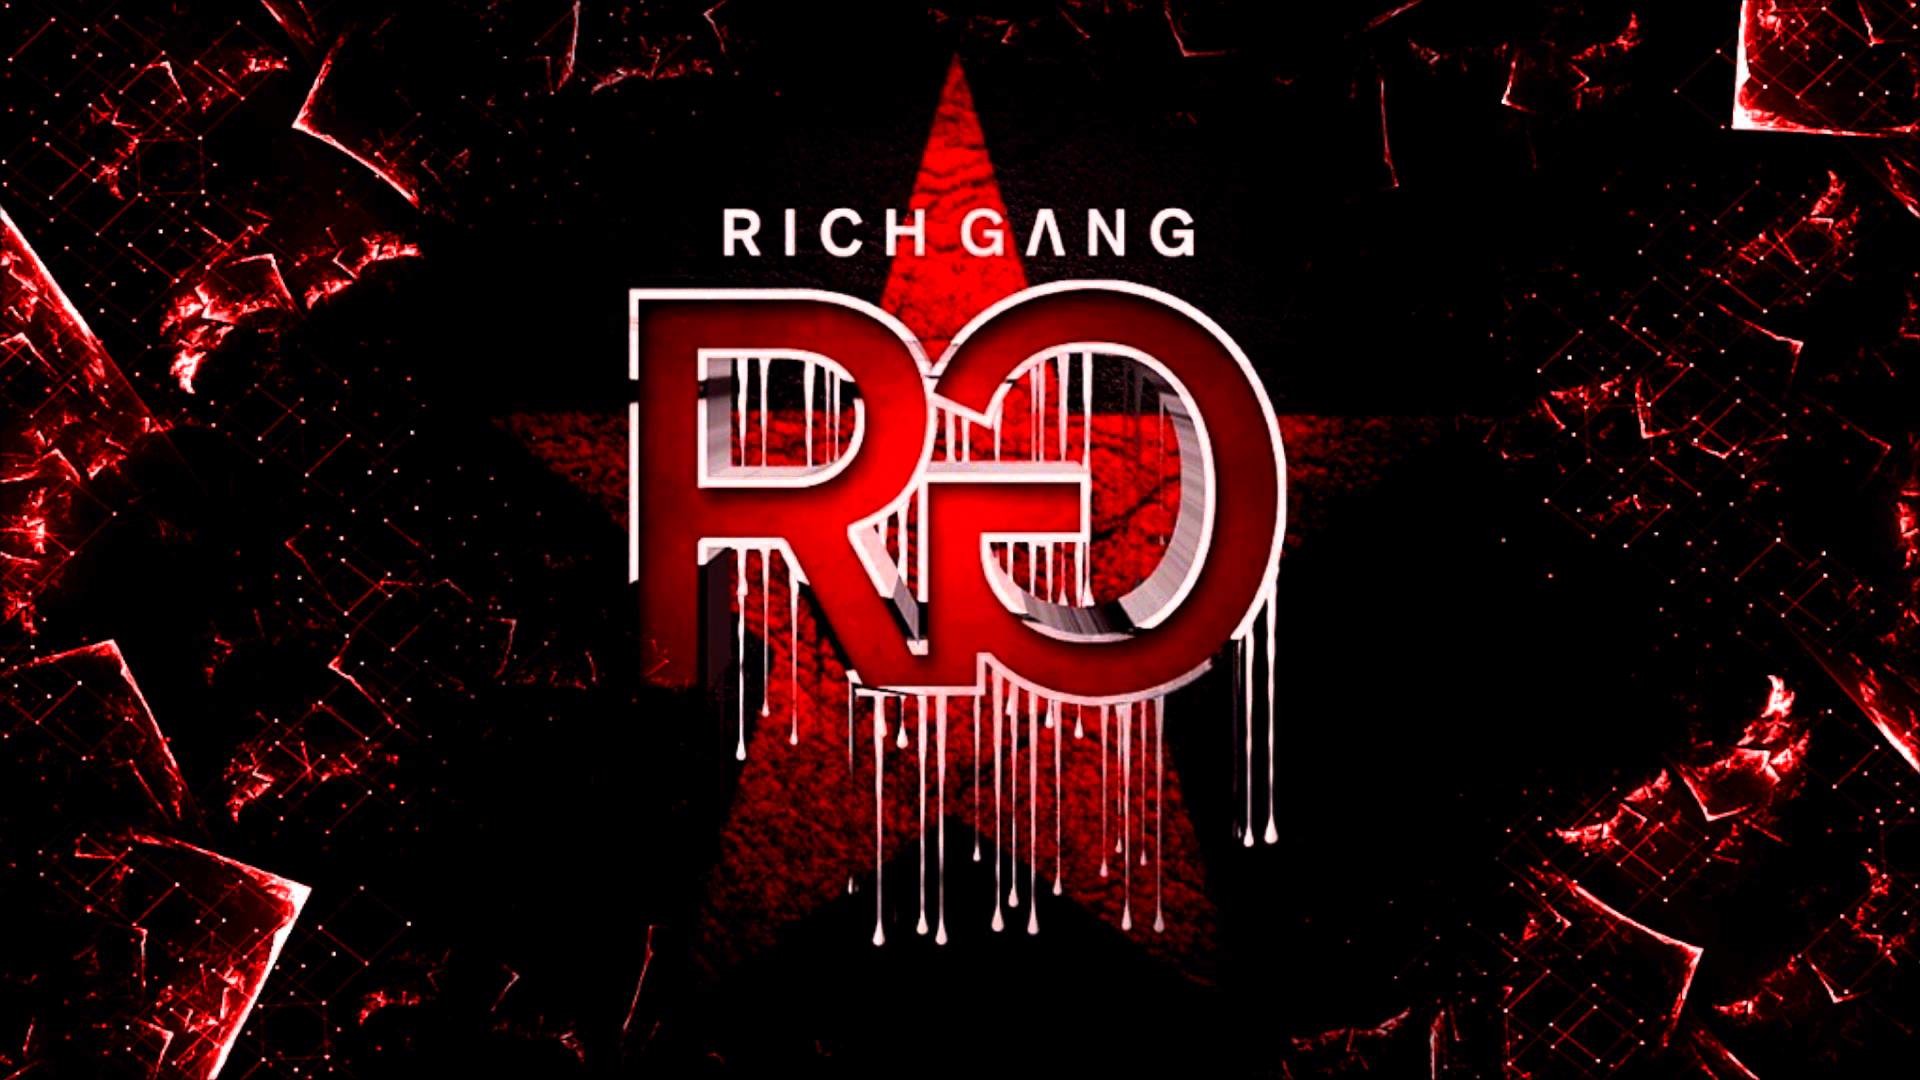 1920x1080 Rich Gang Logo Wallpaper Rich gang album cover